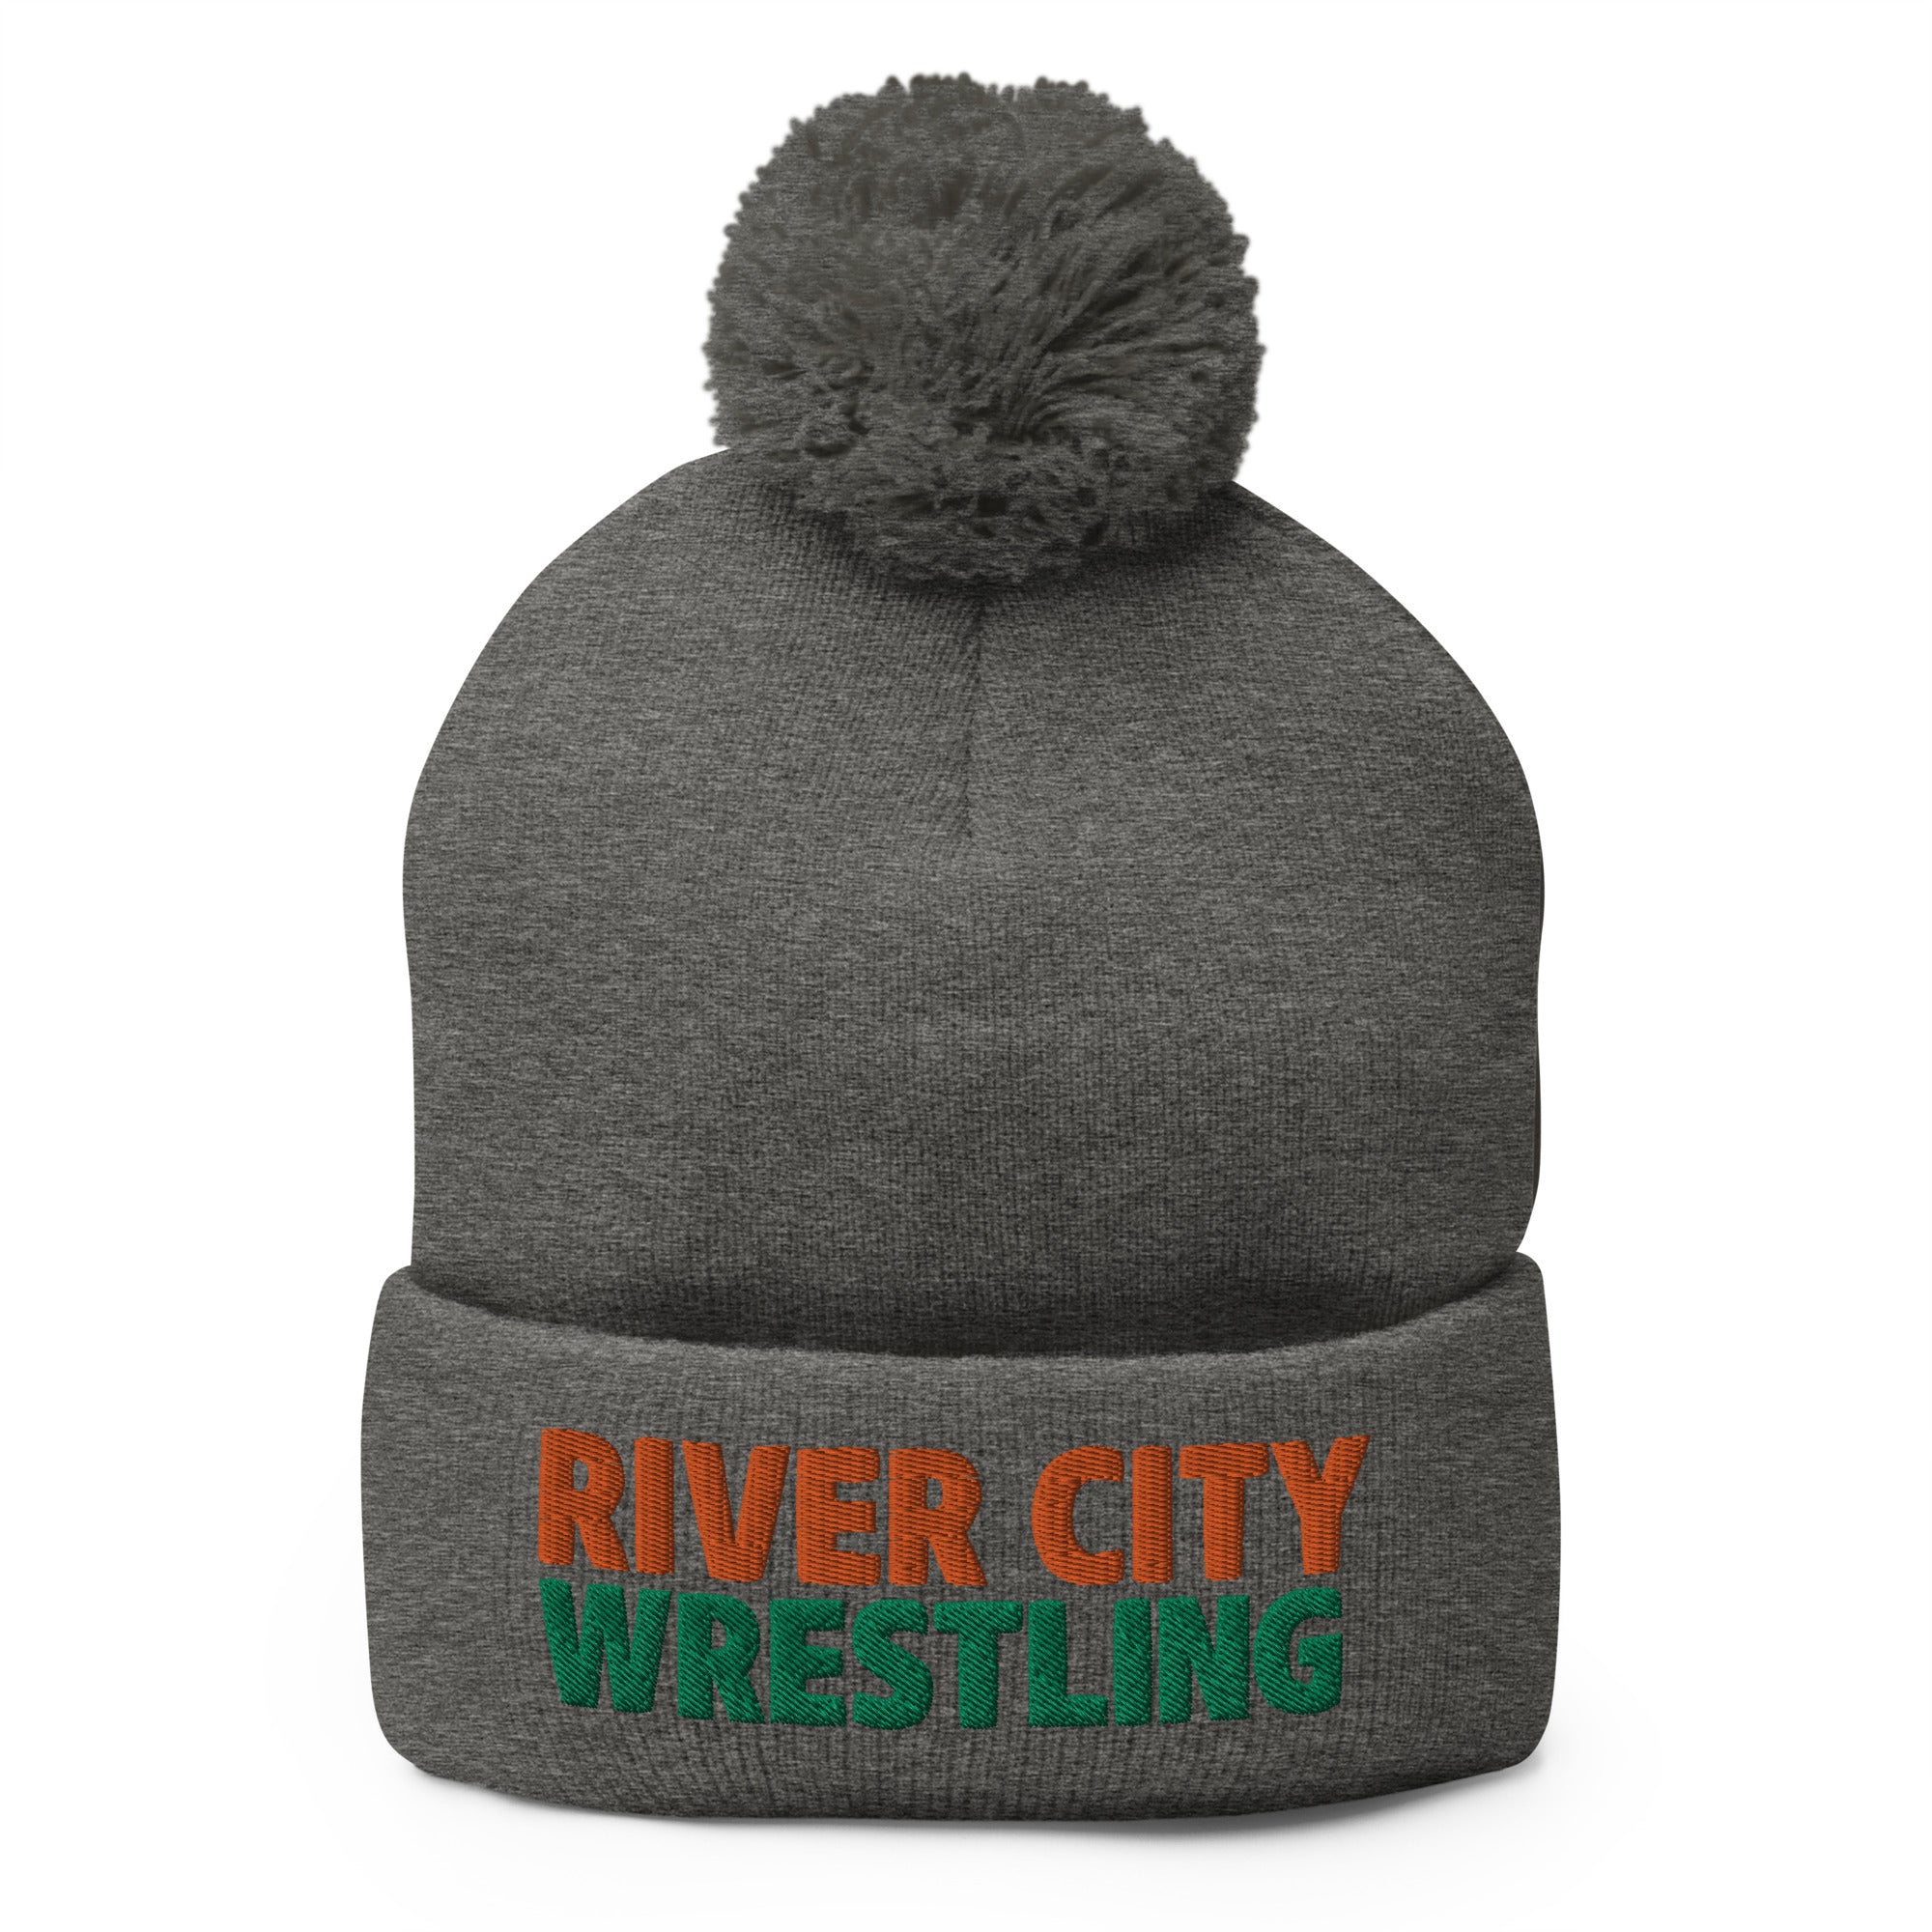 River City Wrestling Club Fall 2022 Pom-Pom Knit Cap